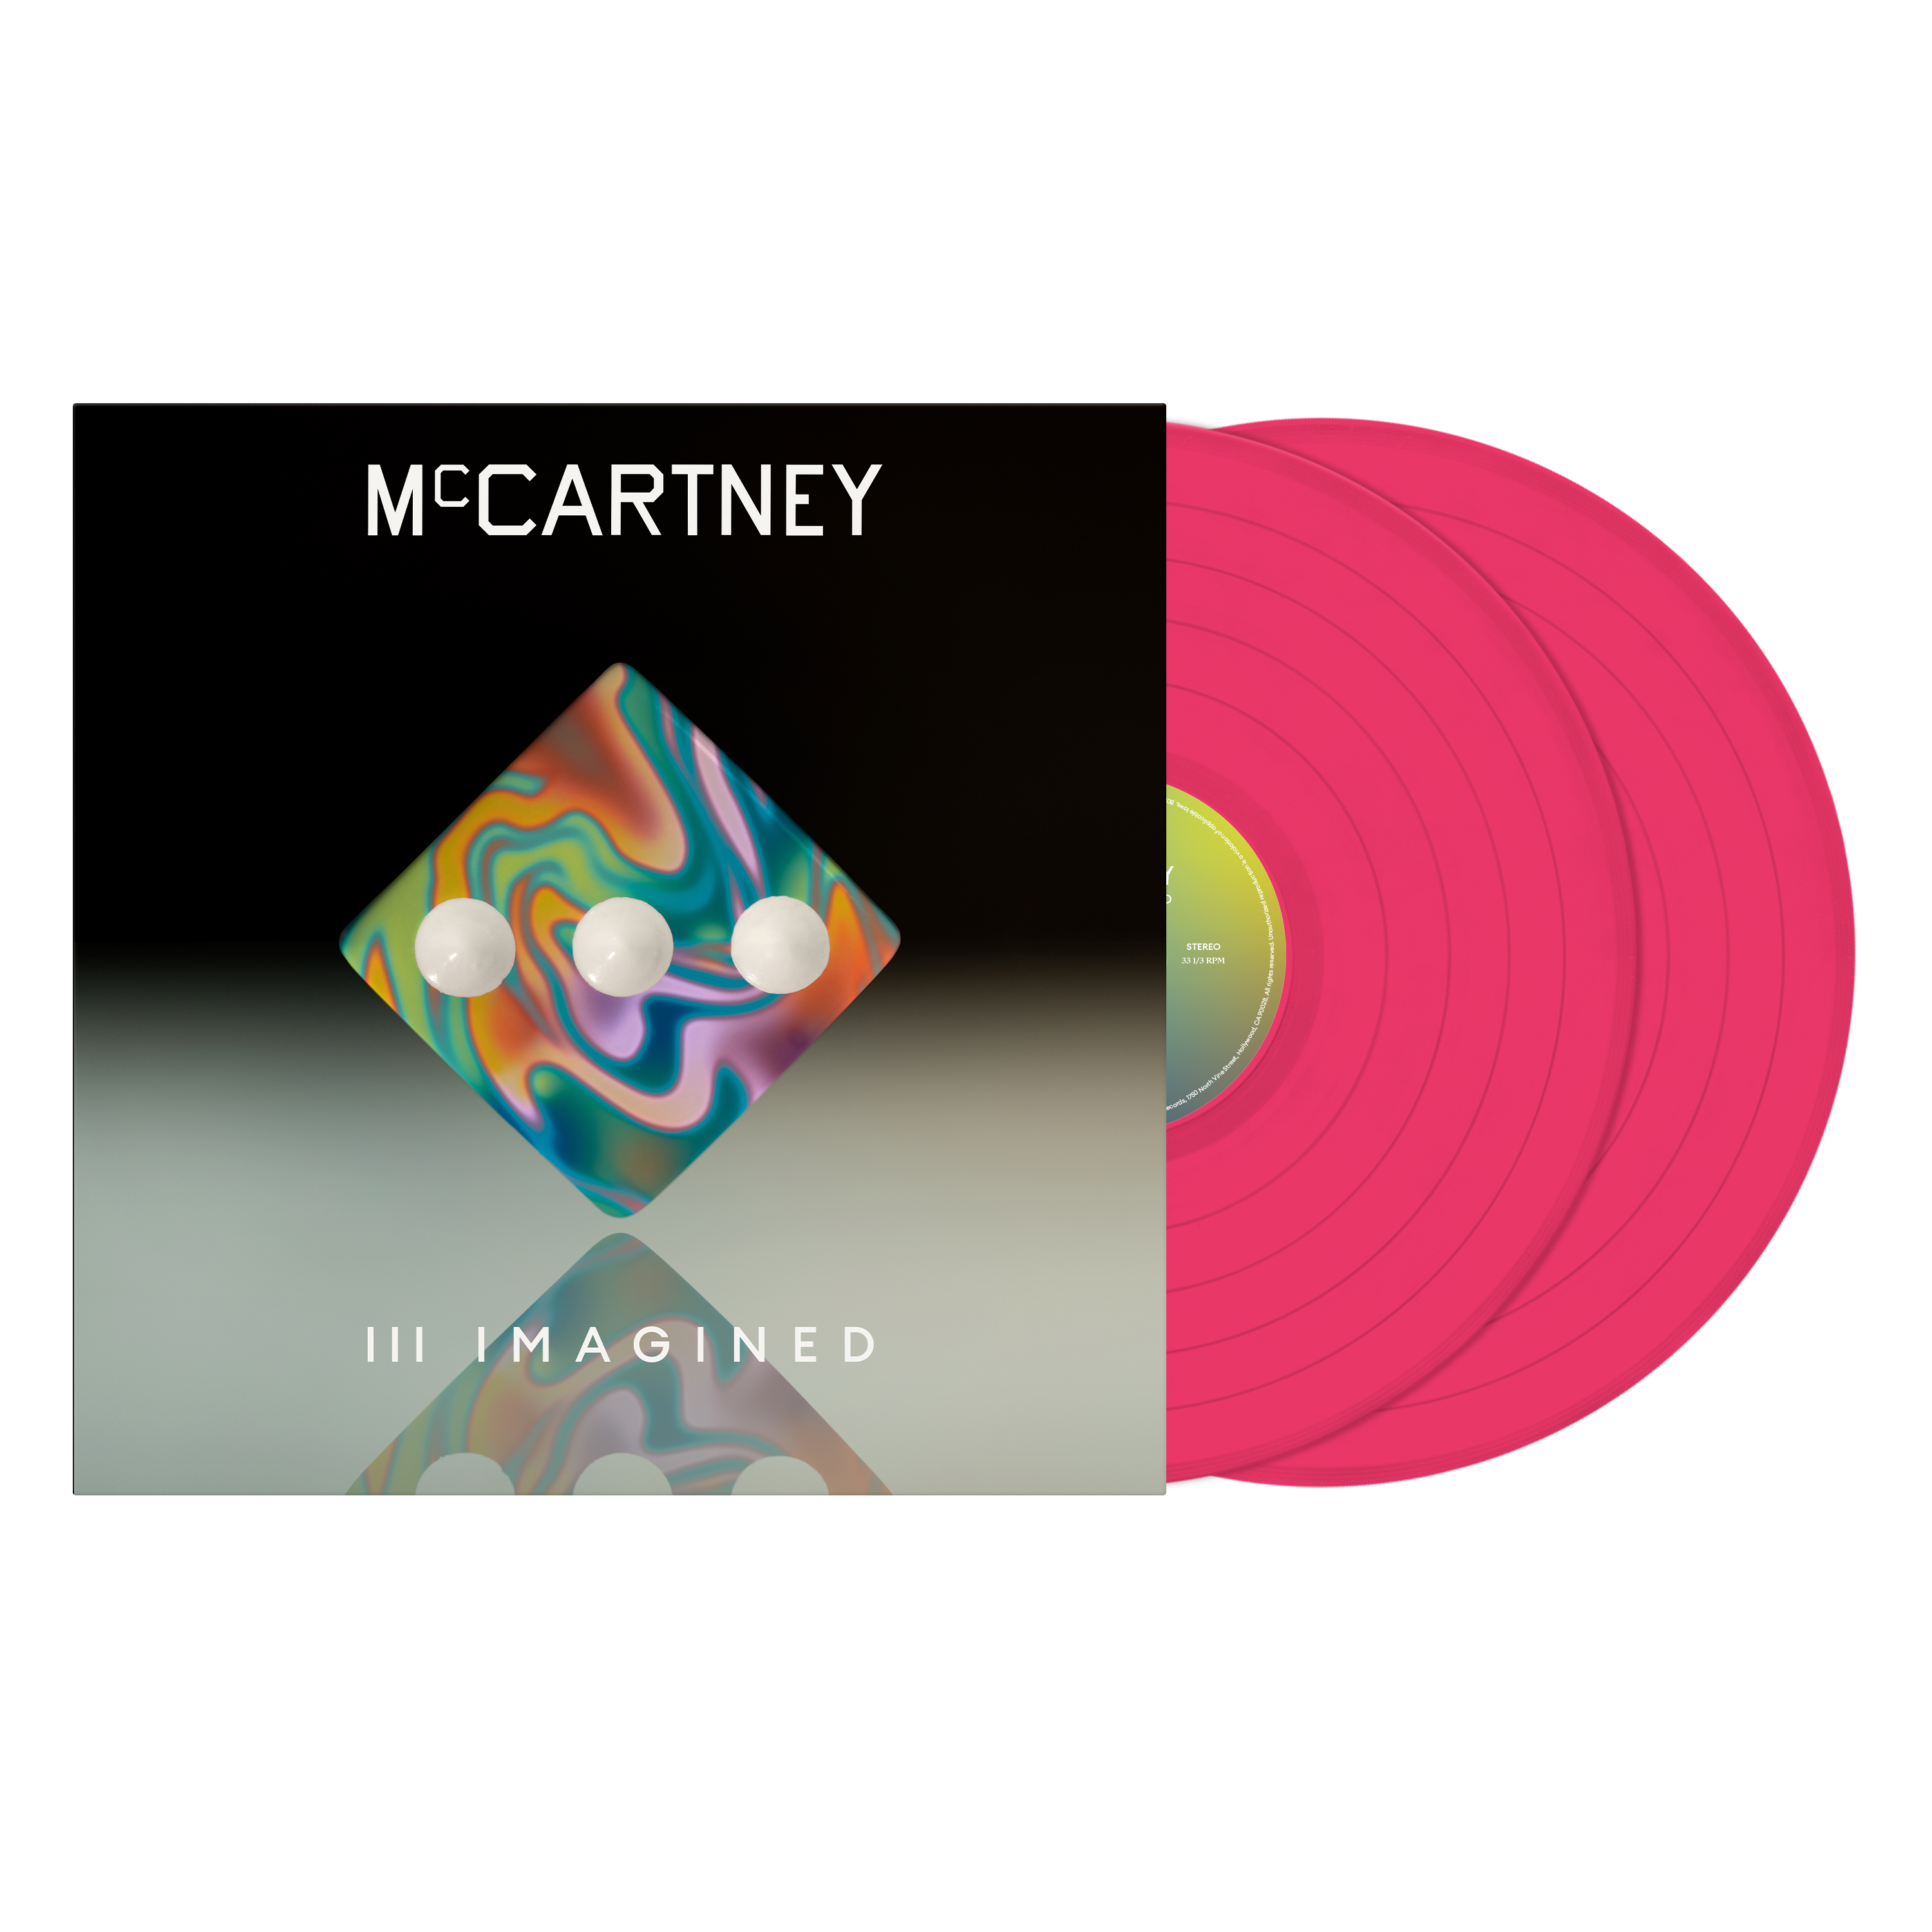 Paul McCartney - McCartney III Imagined: Limited Pink Vinyl 2LP